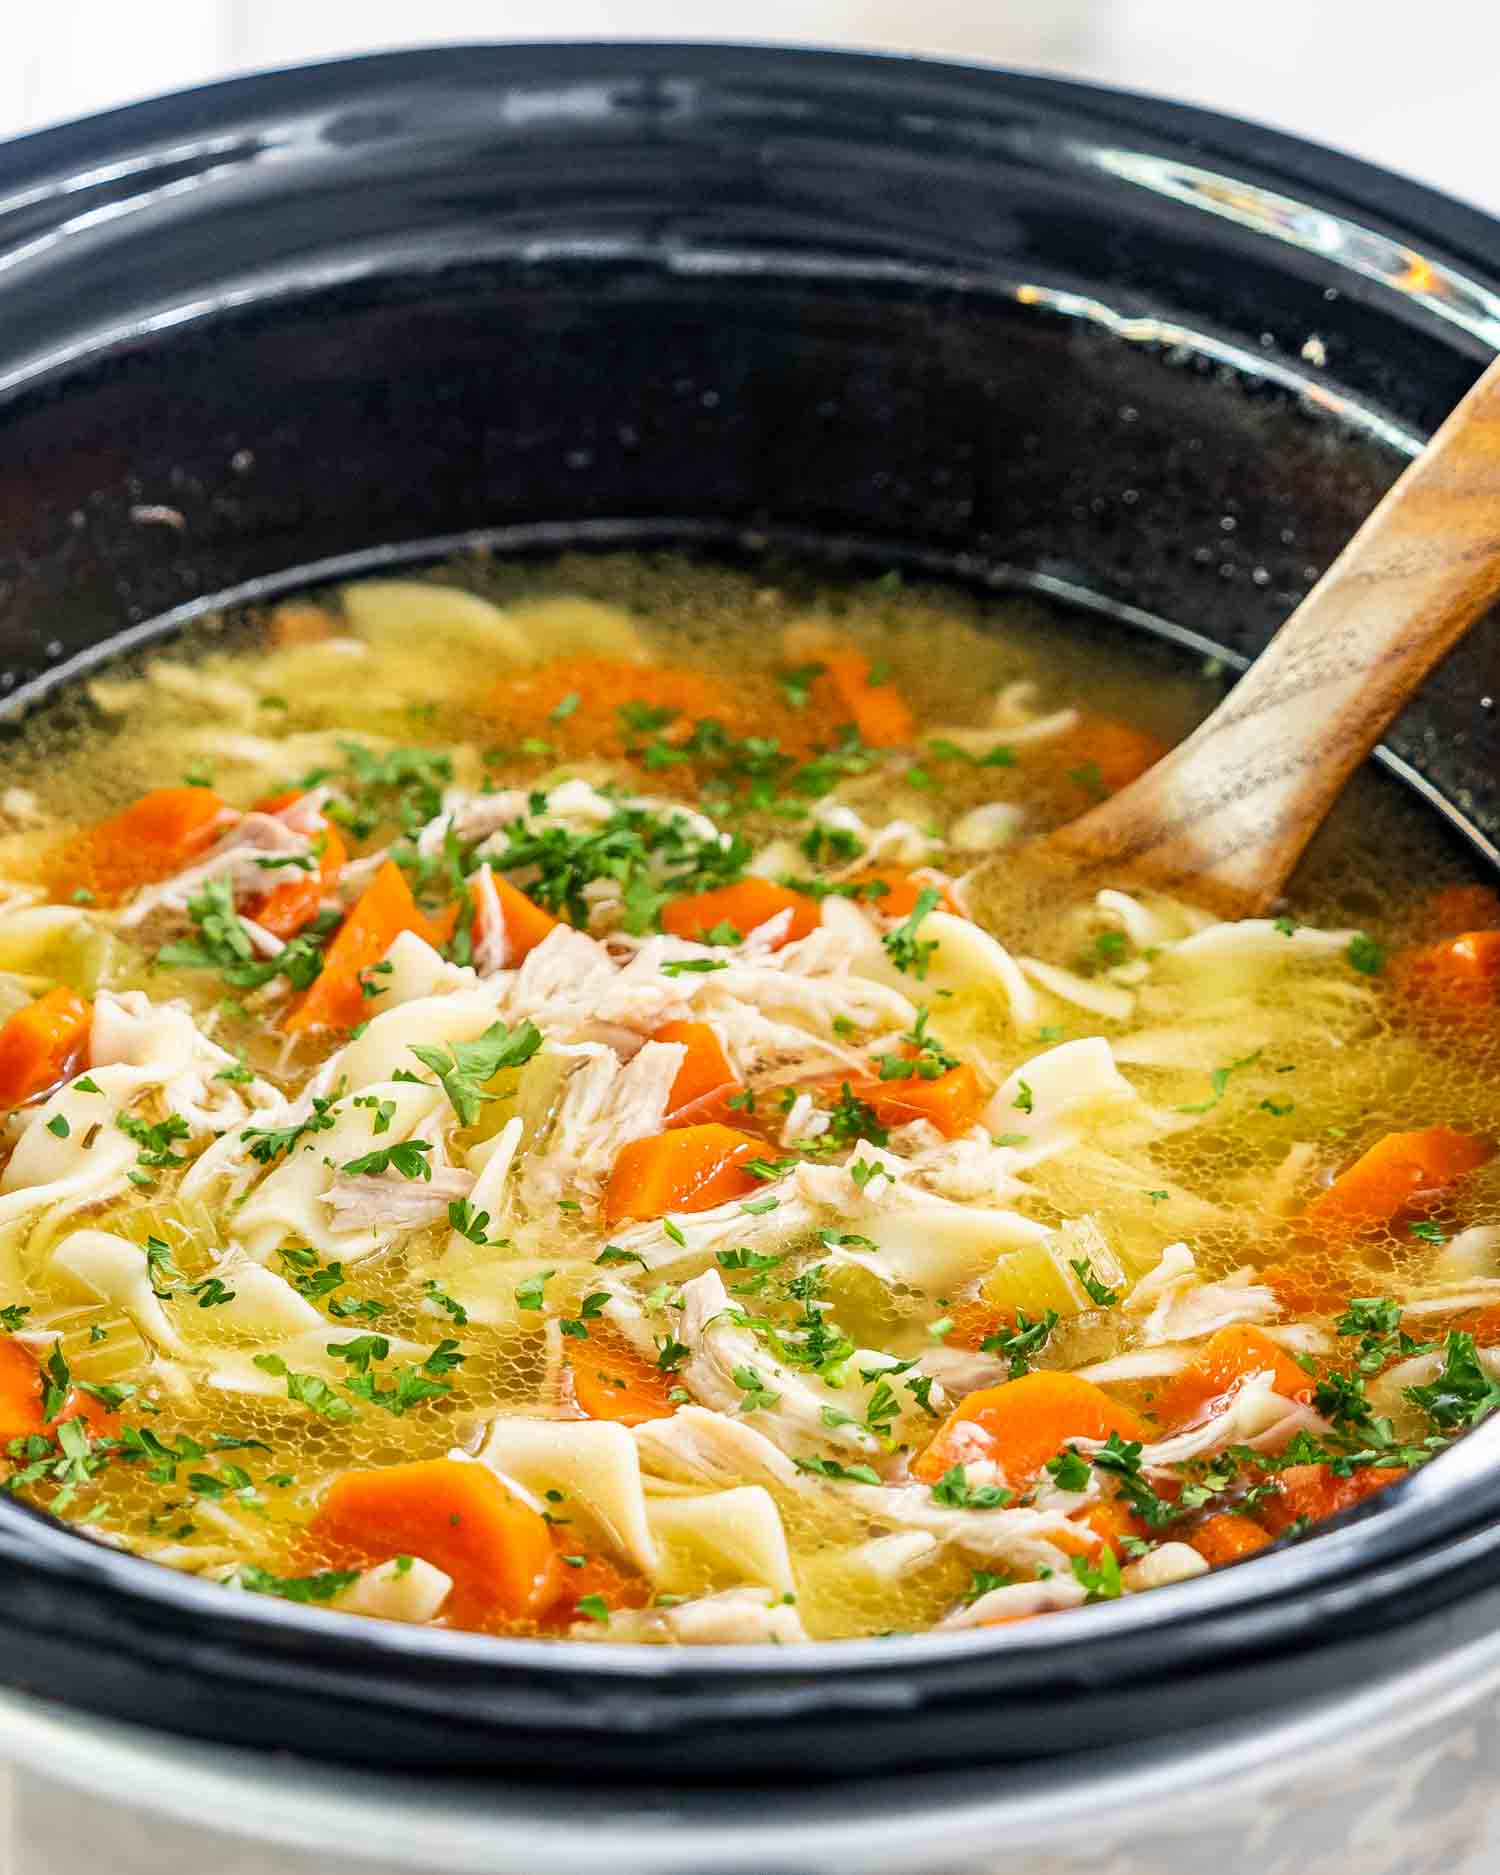 https://www.jocooks.com/wp-content/uploads/2019/02/crockpot-chicken-noodle-soup-1-12.jpg